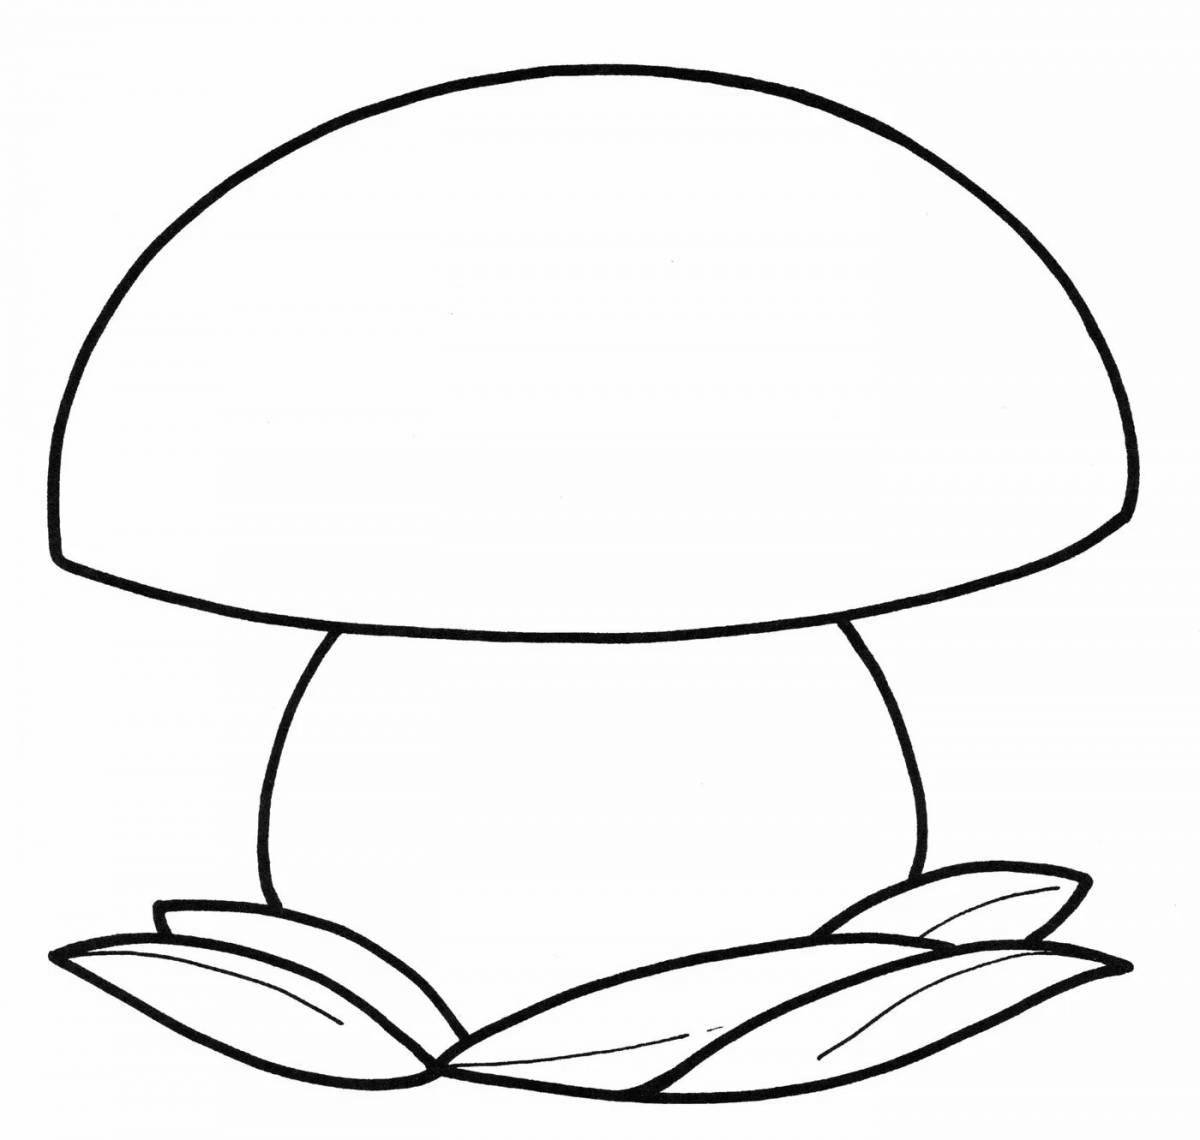 Adorable porcini mushrooms coloring book for kids